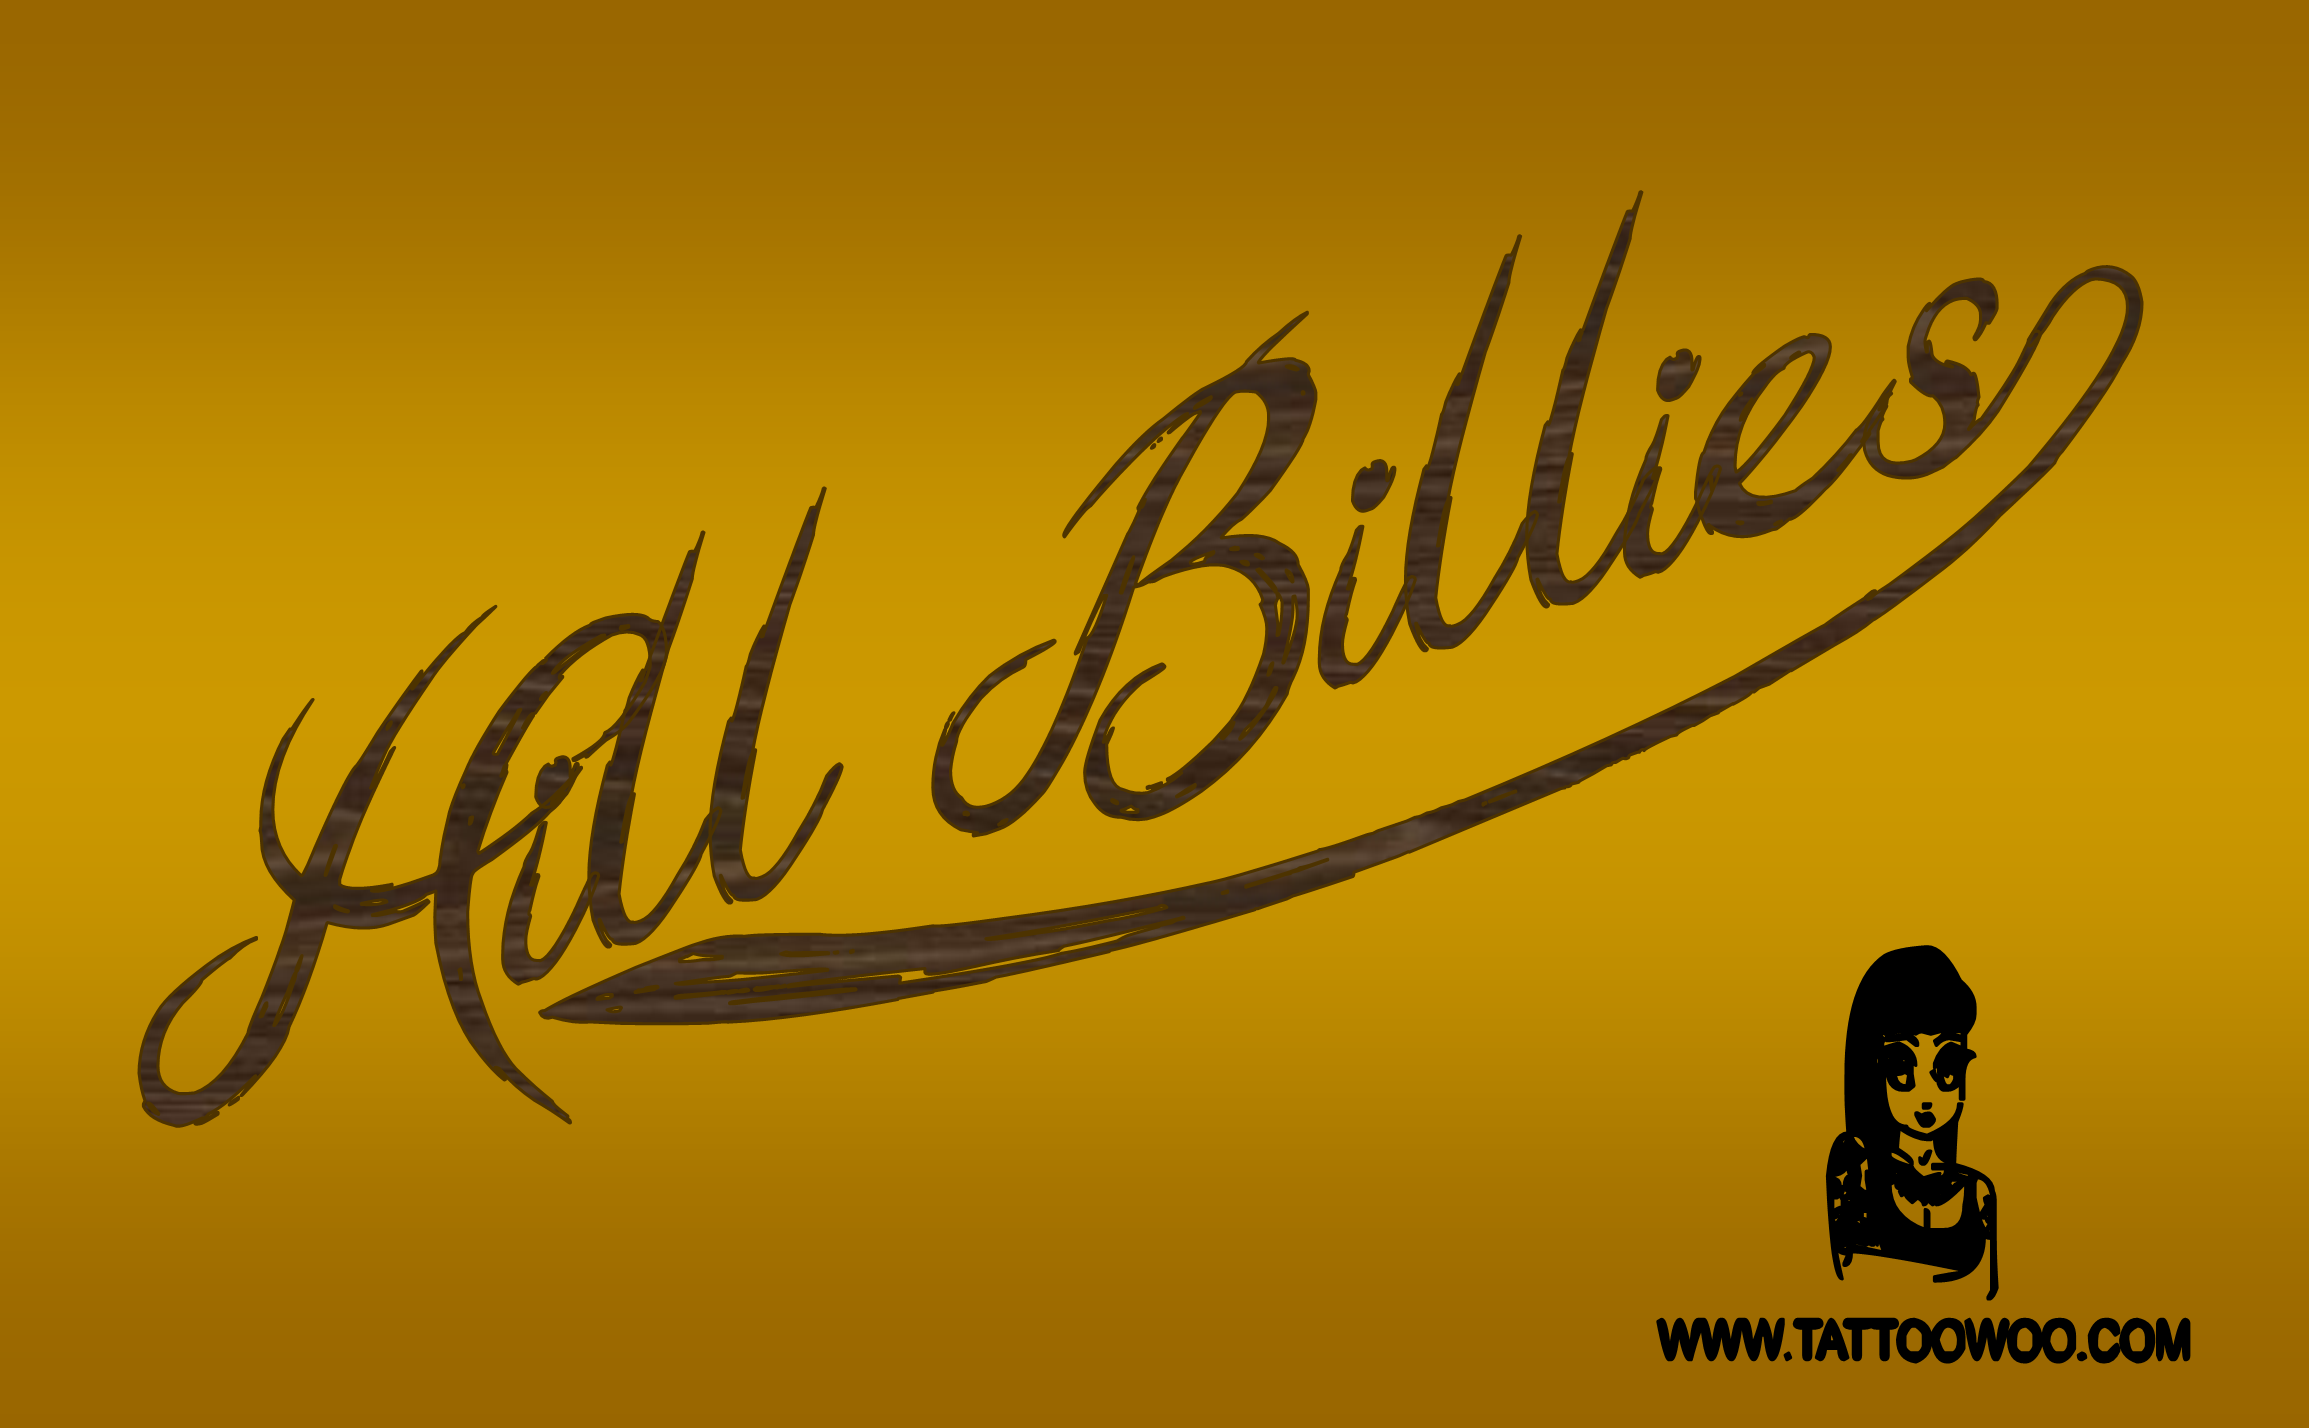 Hill Billies